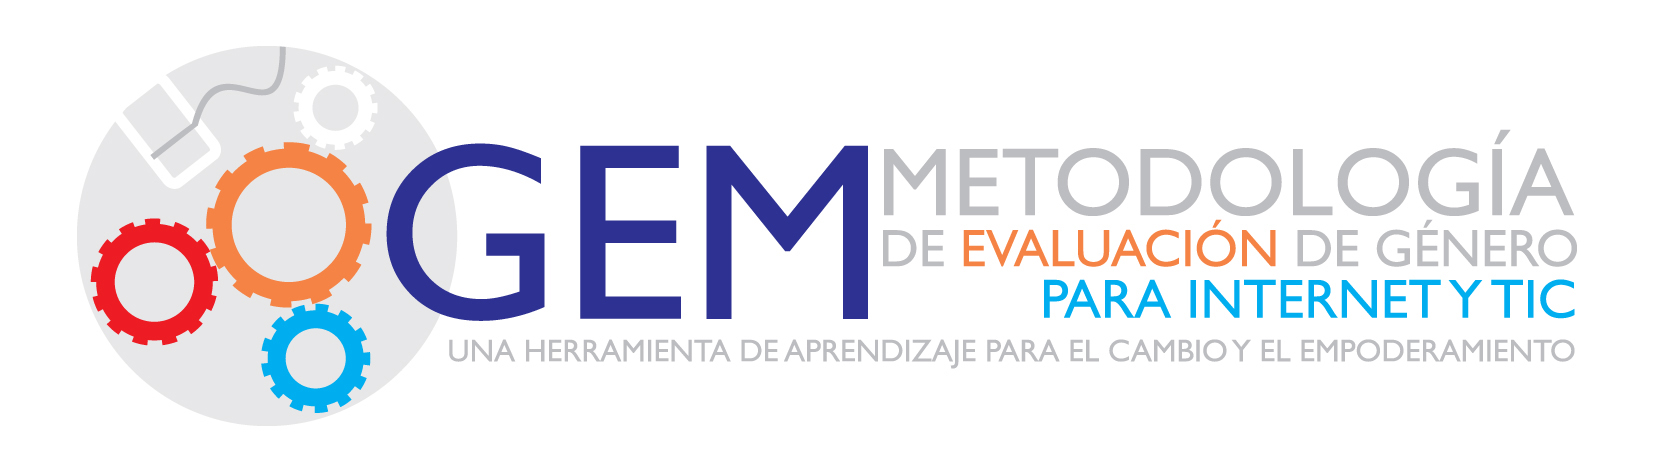 GEM_espanol_final | Association for Progressive Communications